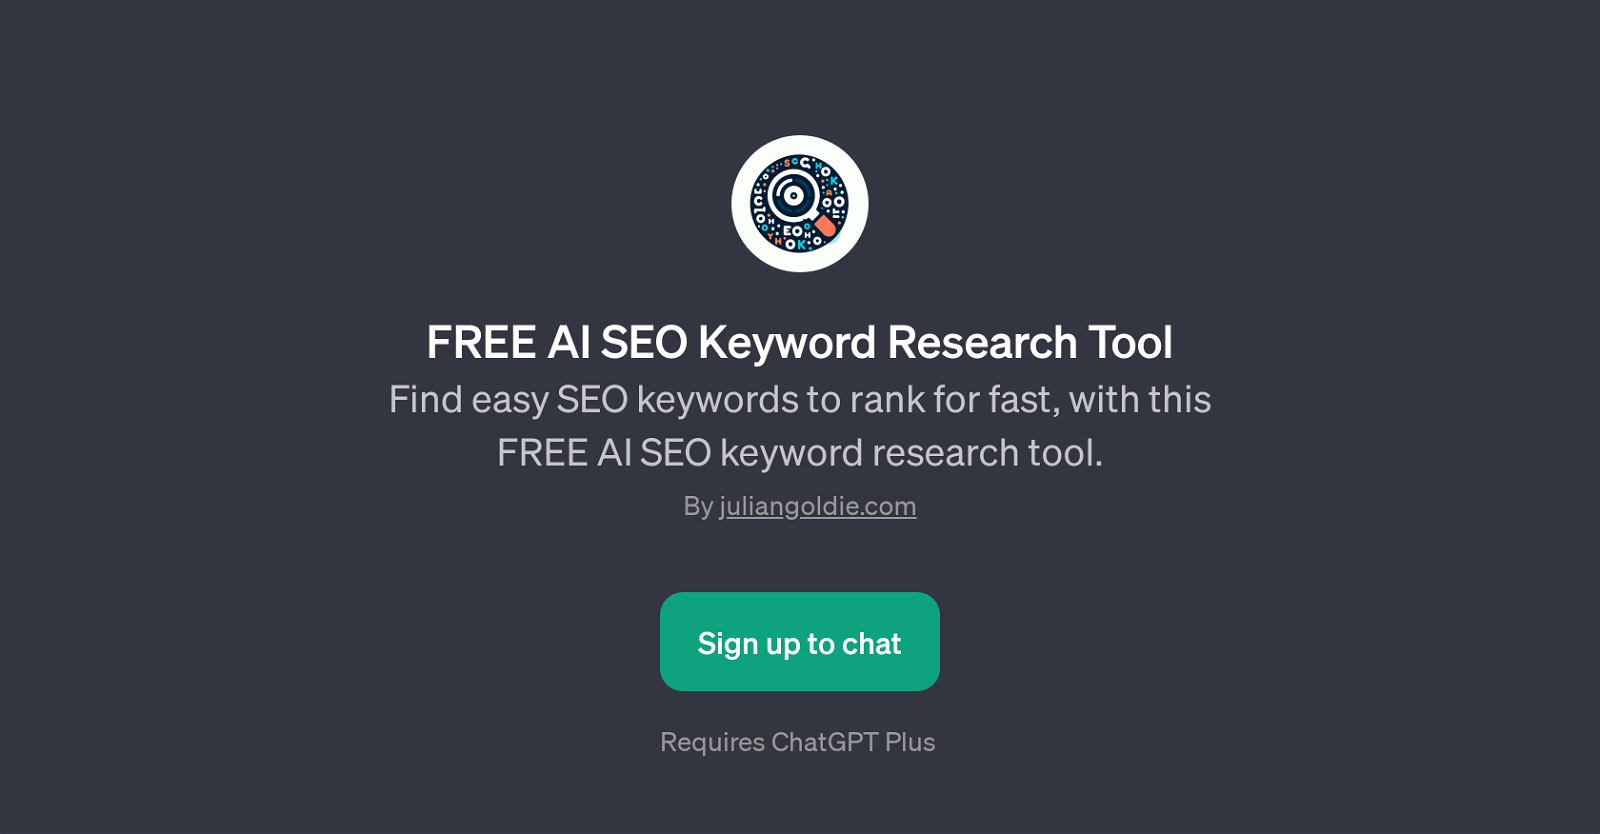 FREE AI SEO Keyword Research Tool website